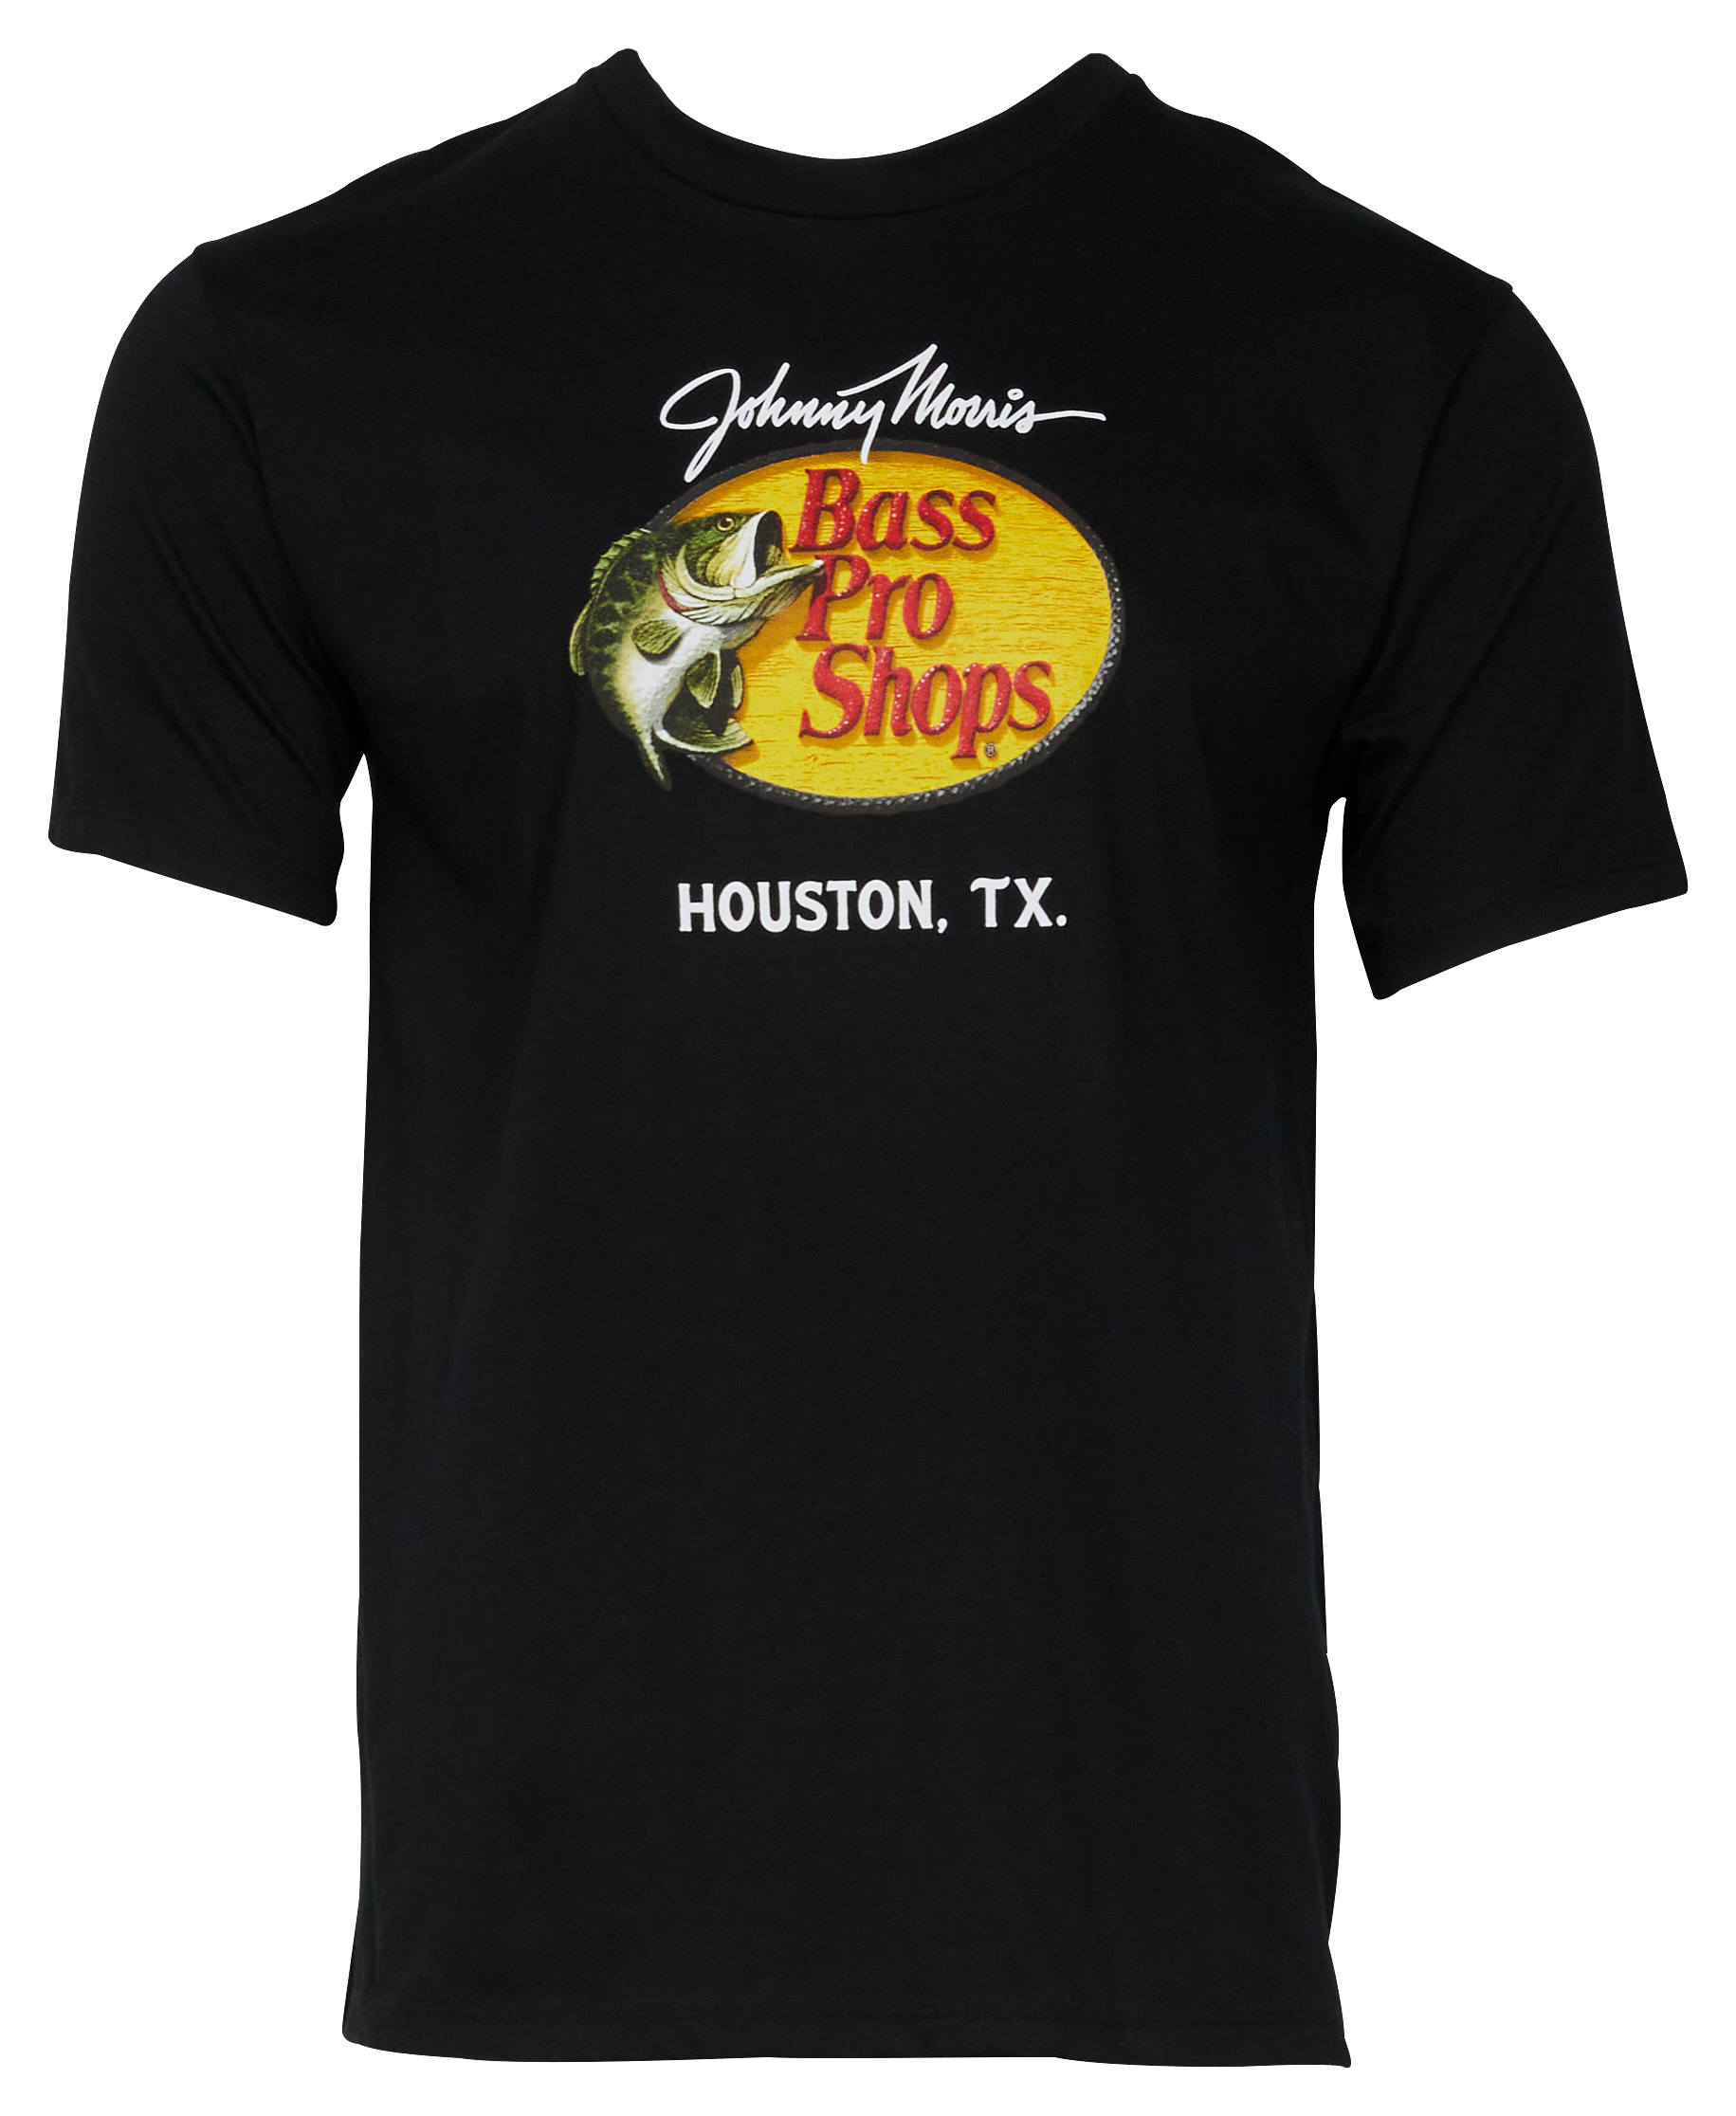 Bass Pro Shops Houston Woodcut Short-Sleeve T-Shirt for Men - Black - M